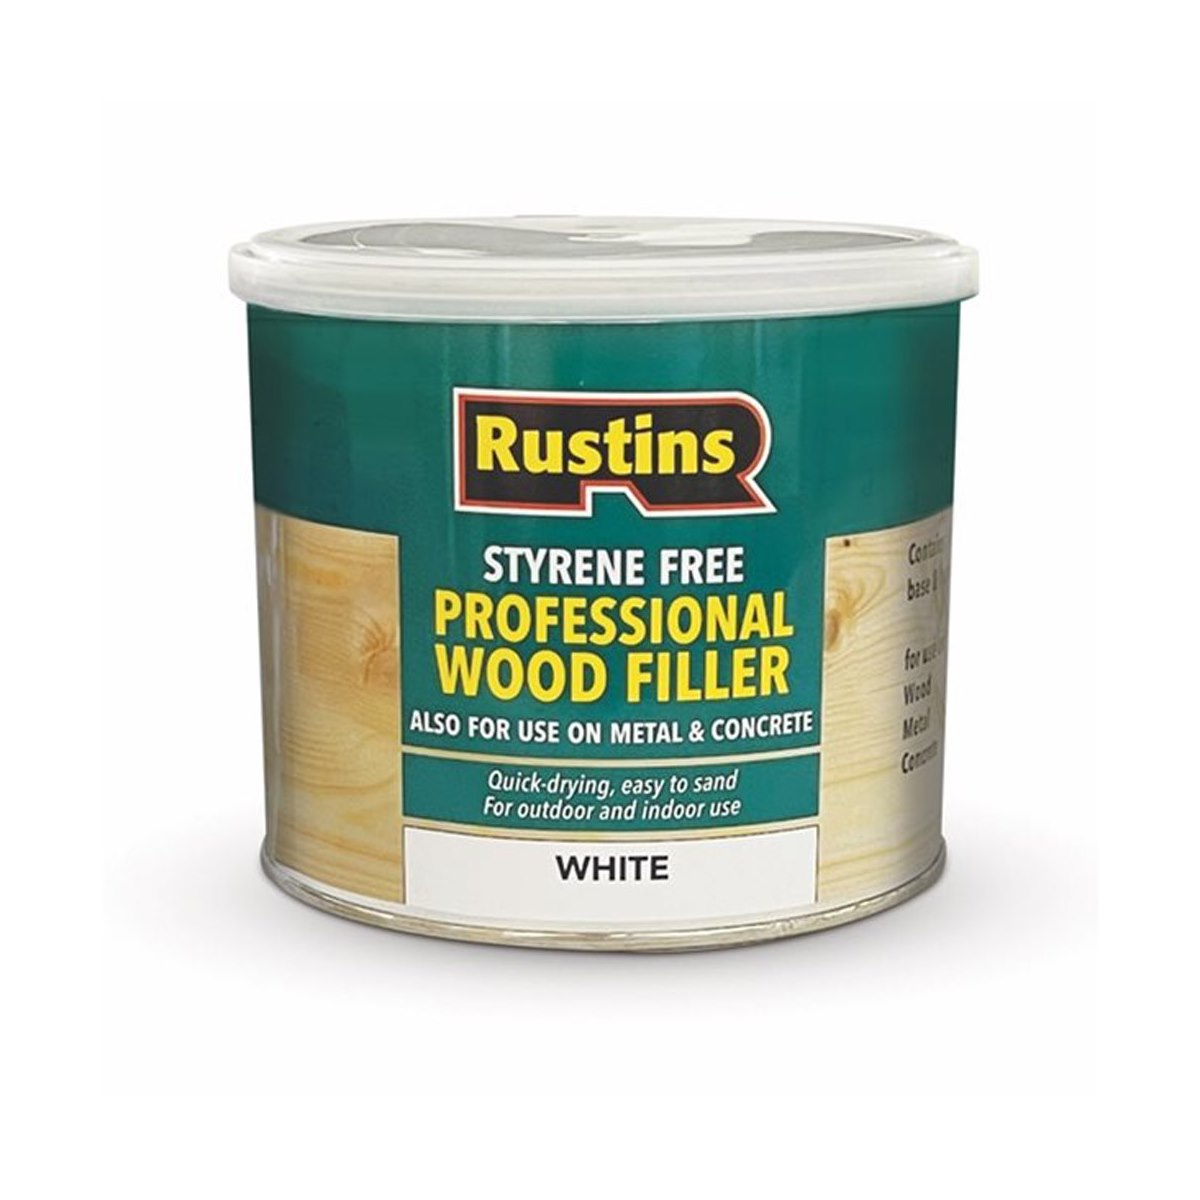 Rustins Styrene Free Professional Wood Filler White 500g